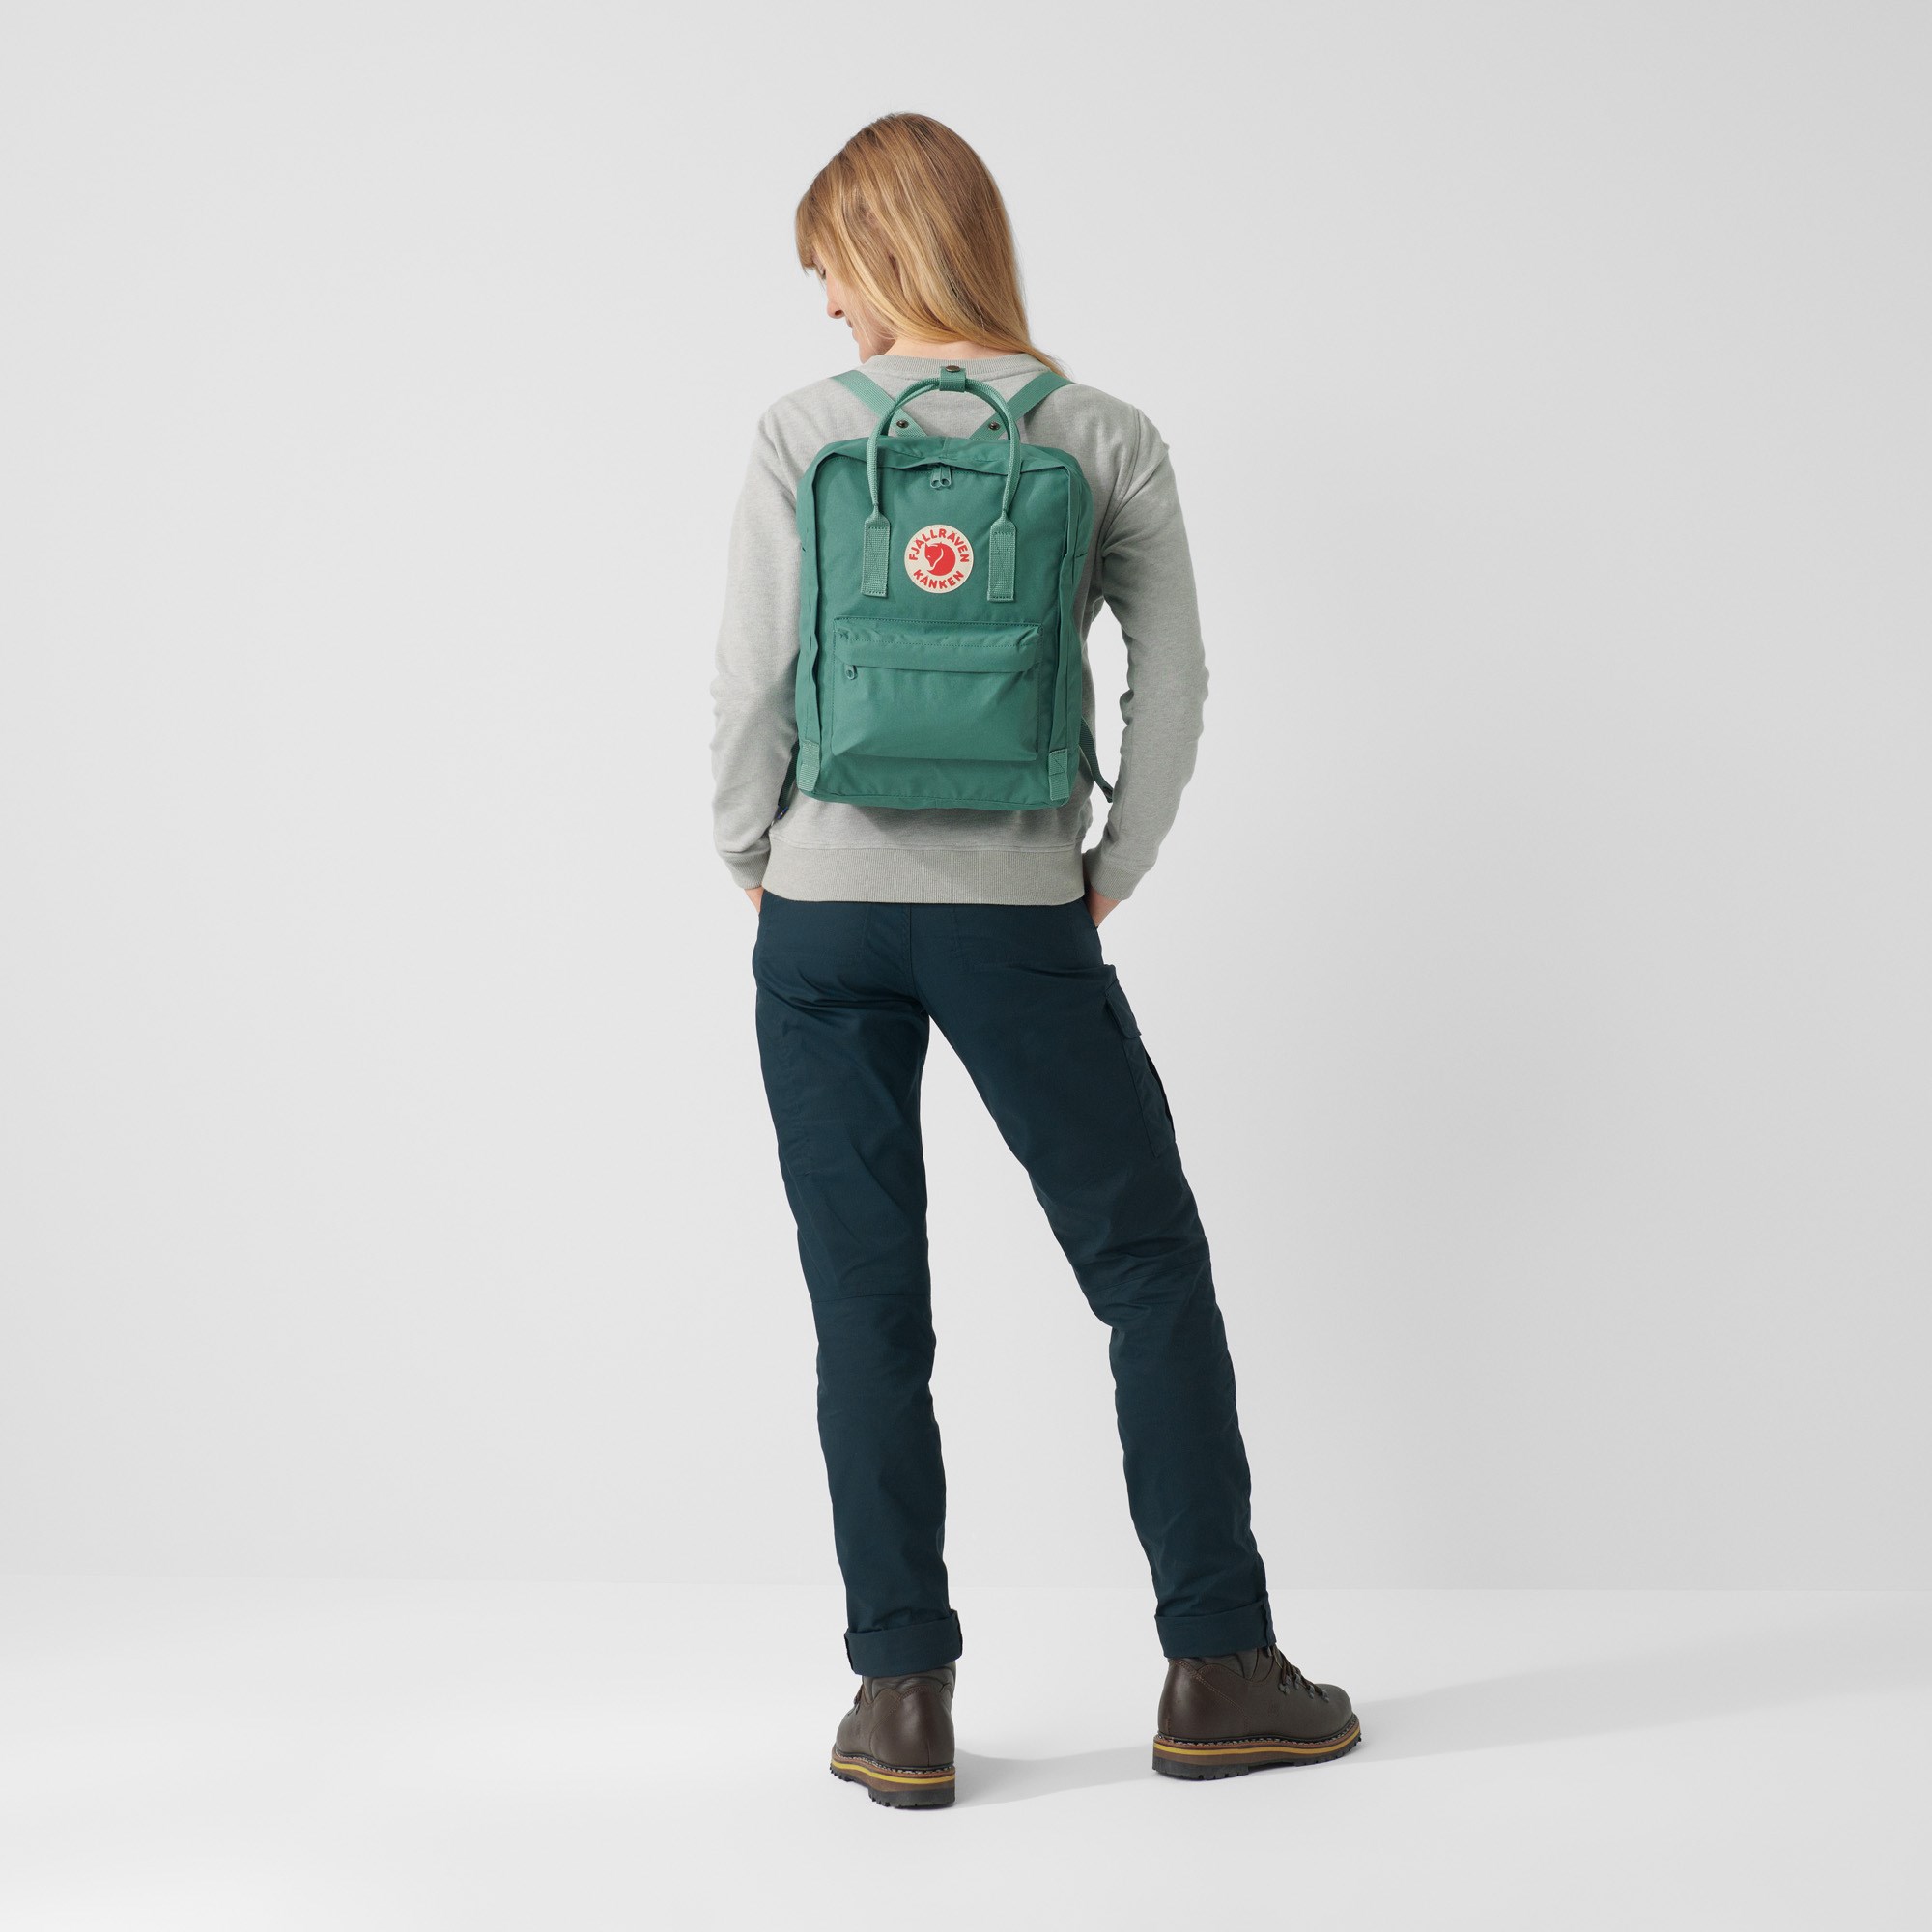 Fjallraven Kan ken 16L Forest Green Backpack Fox School Waterproof Canvas Bag